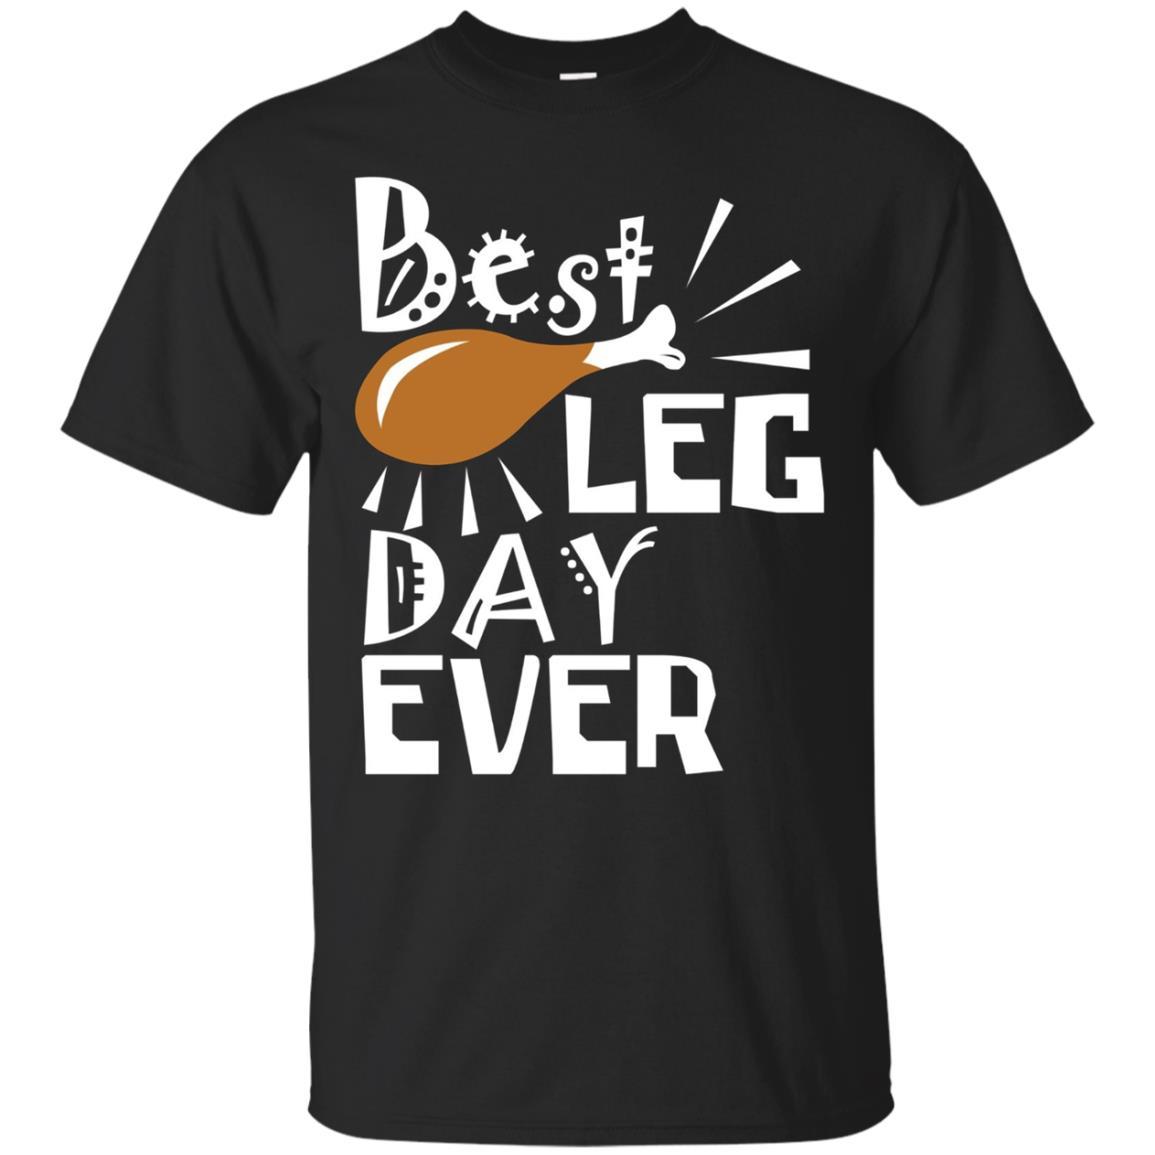 Best Leg Day Ever Funny Turkey Thanksgiving T-shirt